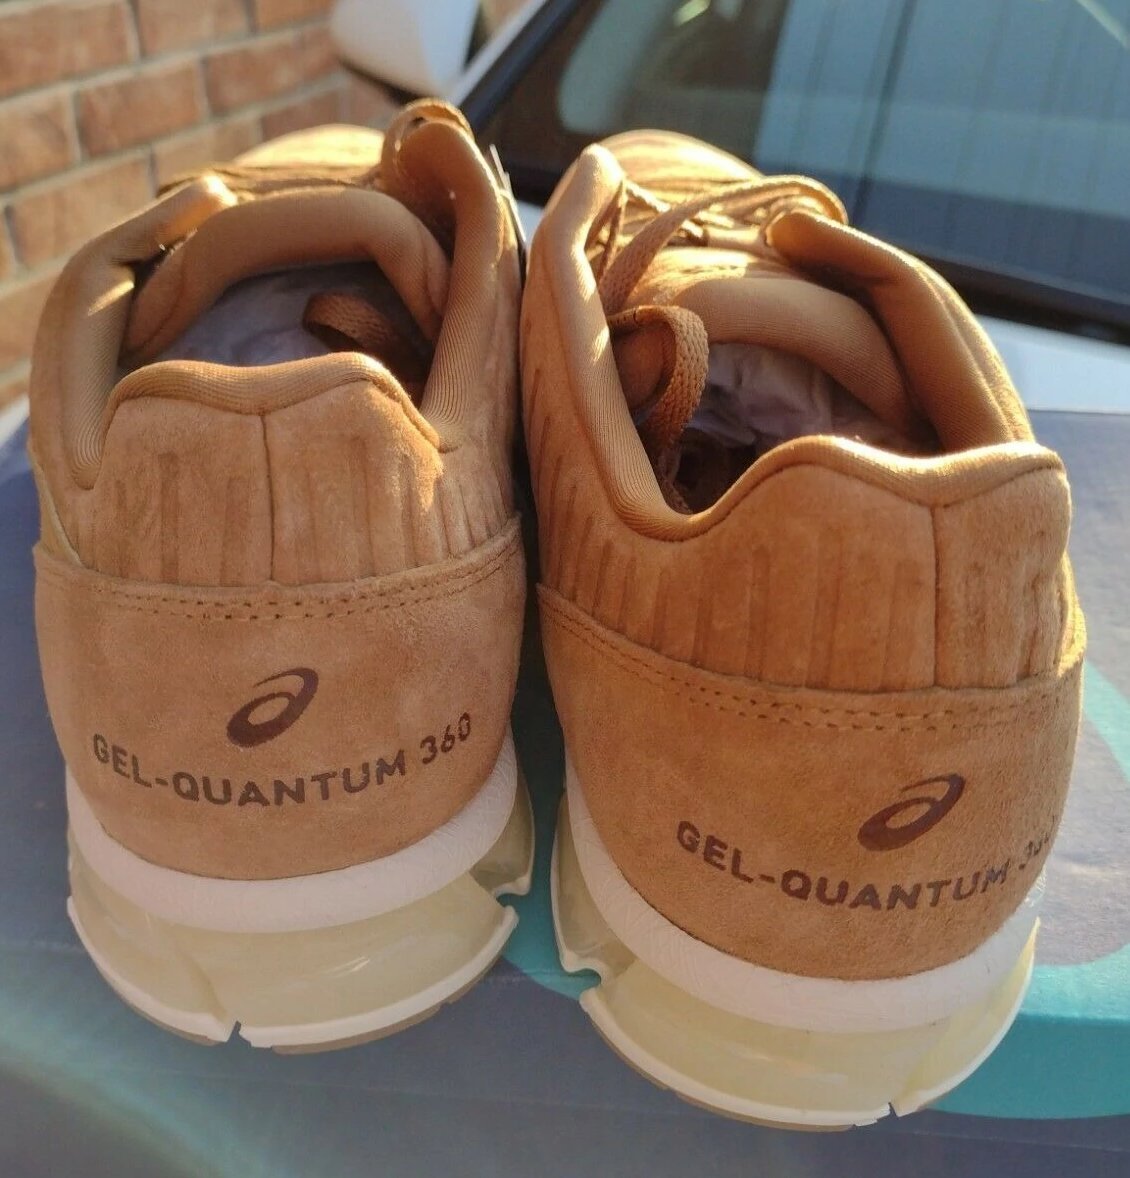 ASICS GEL-Quantum men 360 4 LE Caramel running shoes size 9.5 us